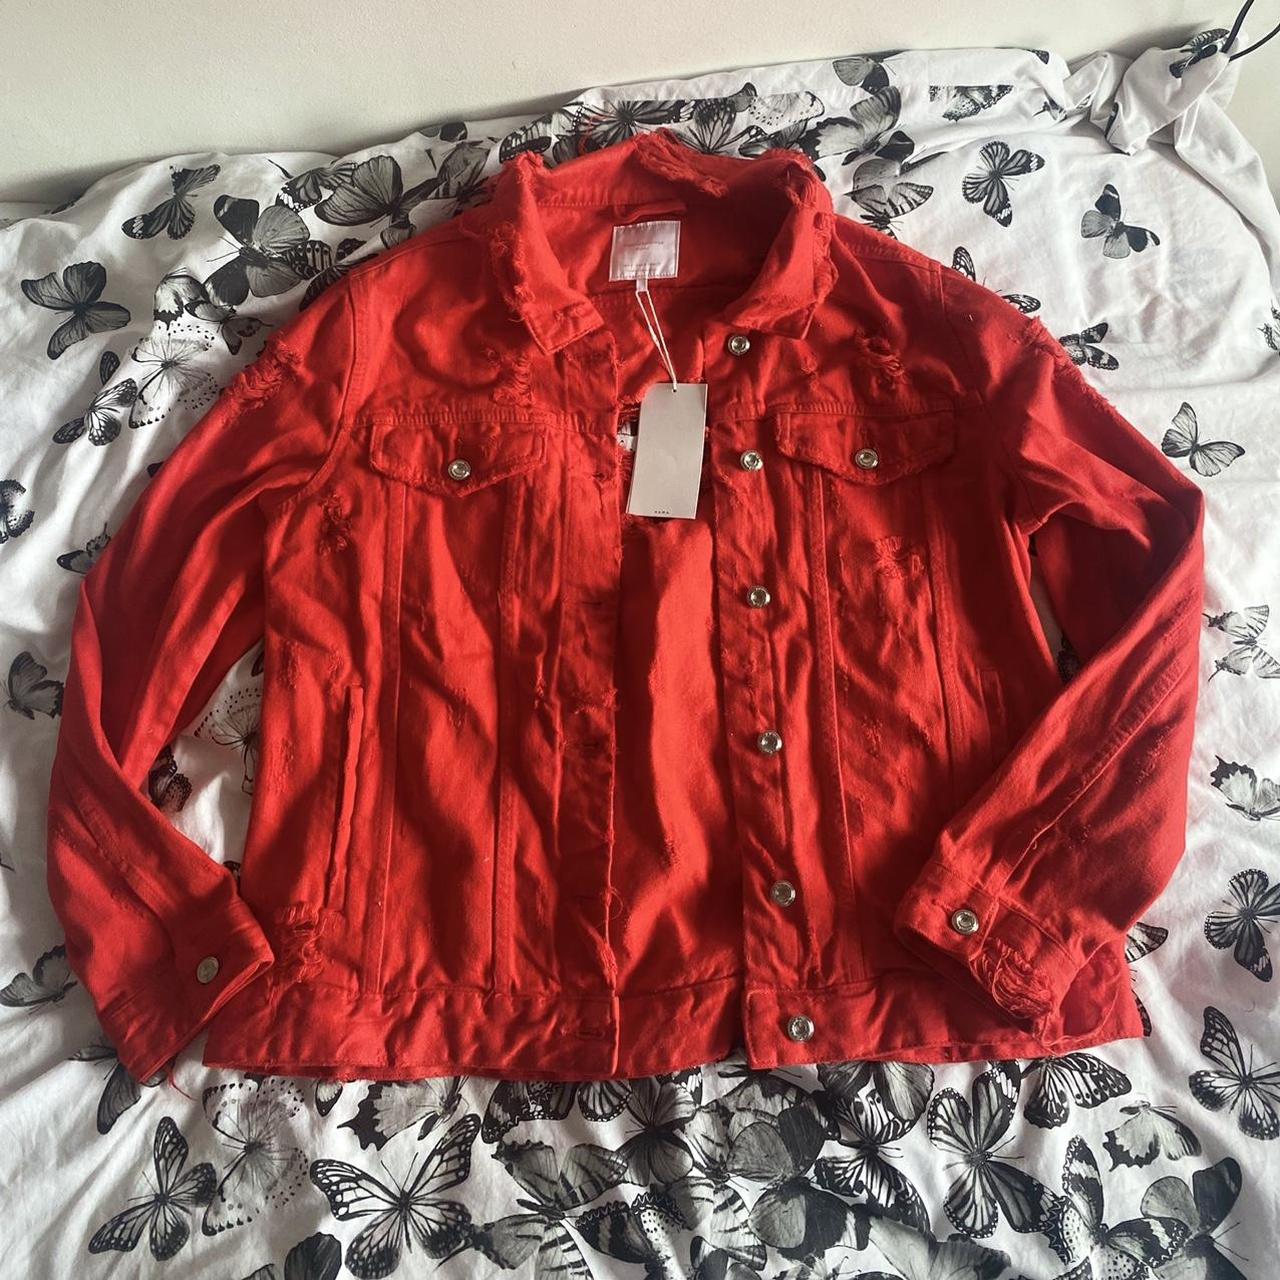 OVERSIZE DENIM JACKET from Zara | Oversized denim jacket, Jackets,  Outerwear women